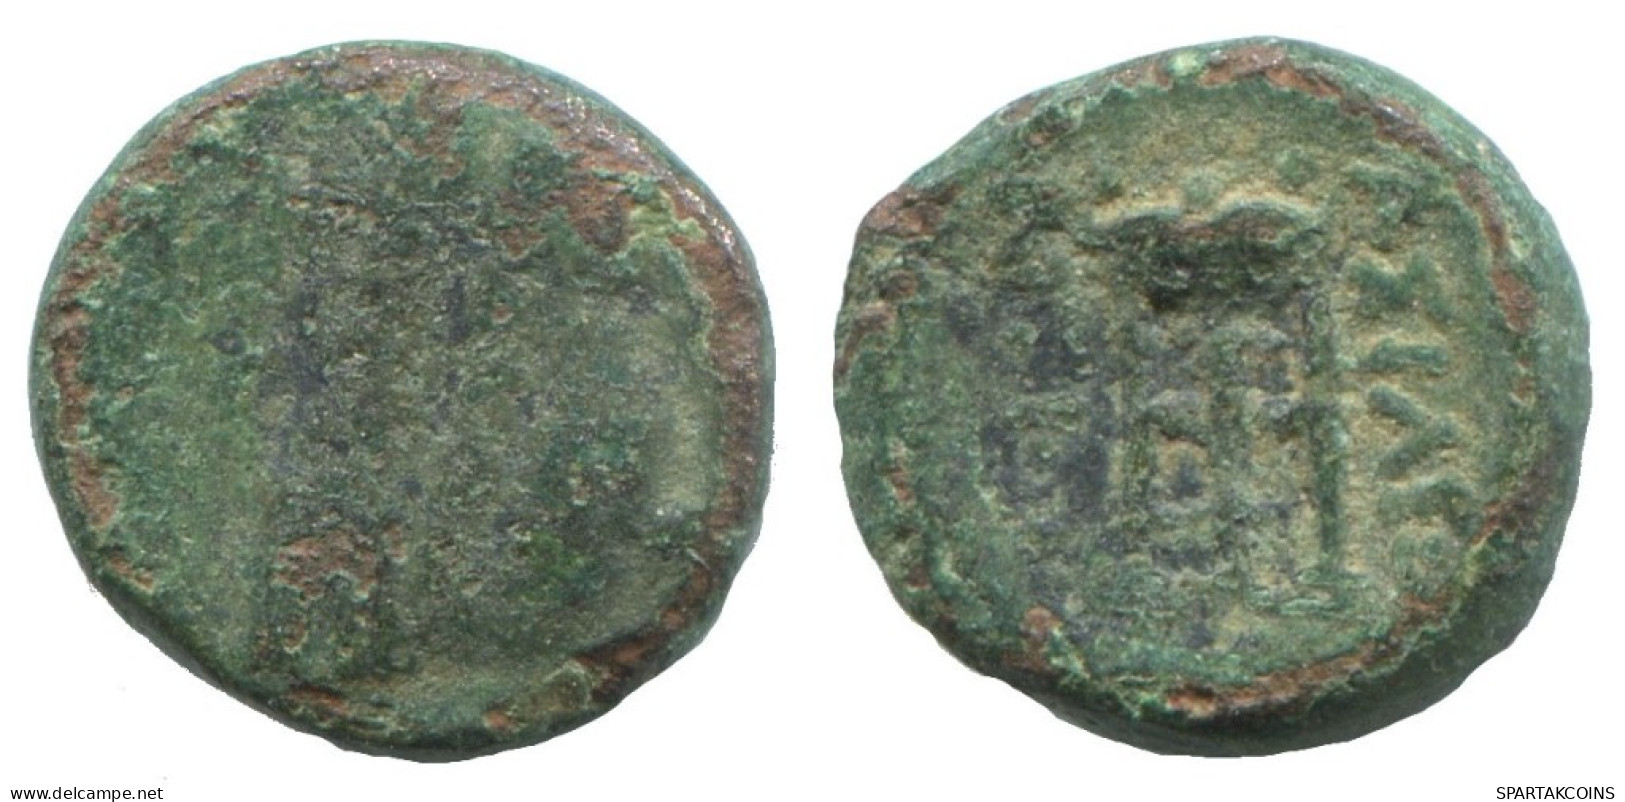 TRIPOD AUTHENTIC ORIGINAL ANCIENT GREEK Coin 1.8g/13mm #AA241.15.U.A - Griechische Münzen